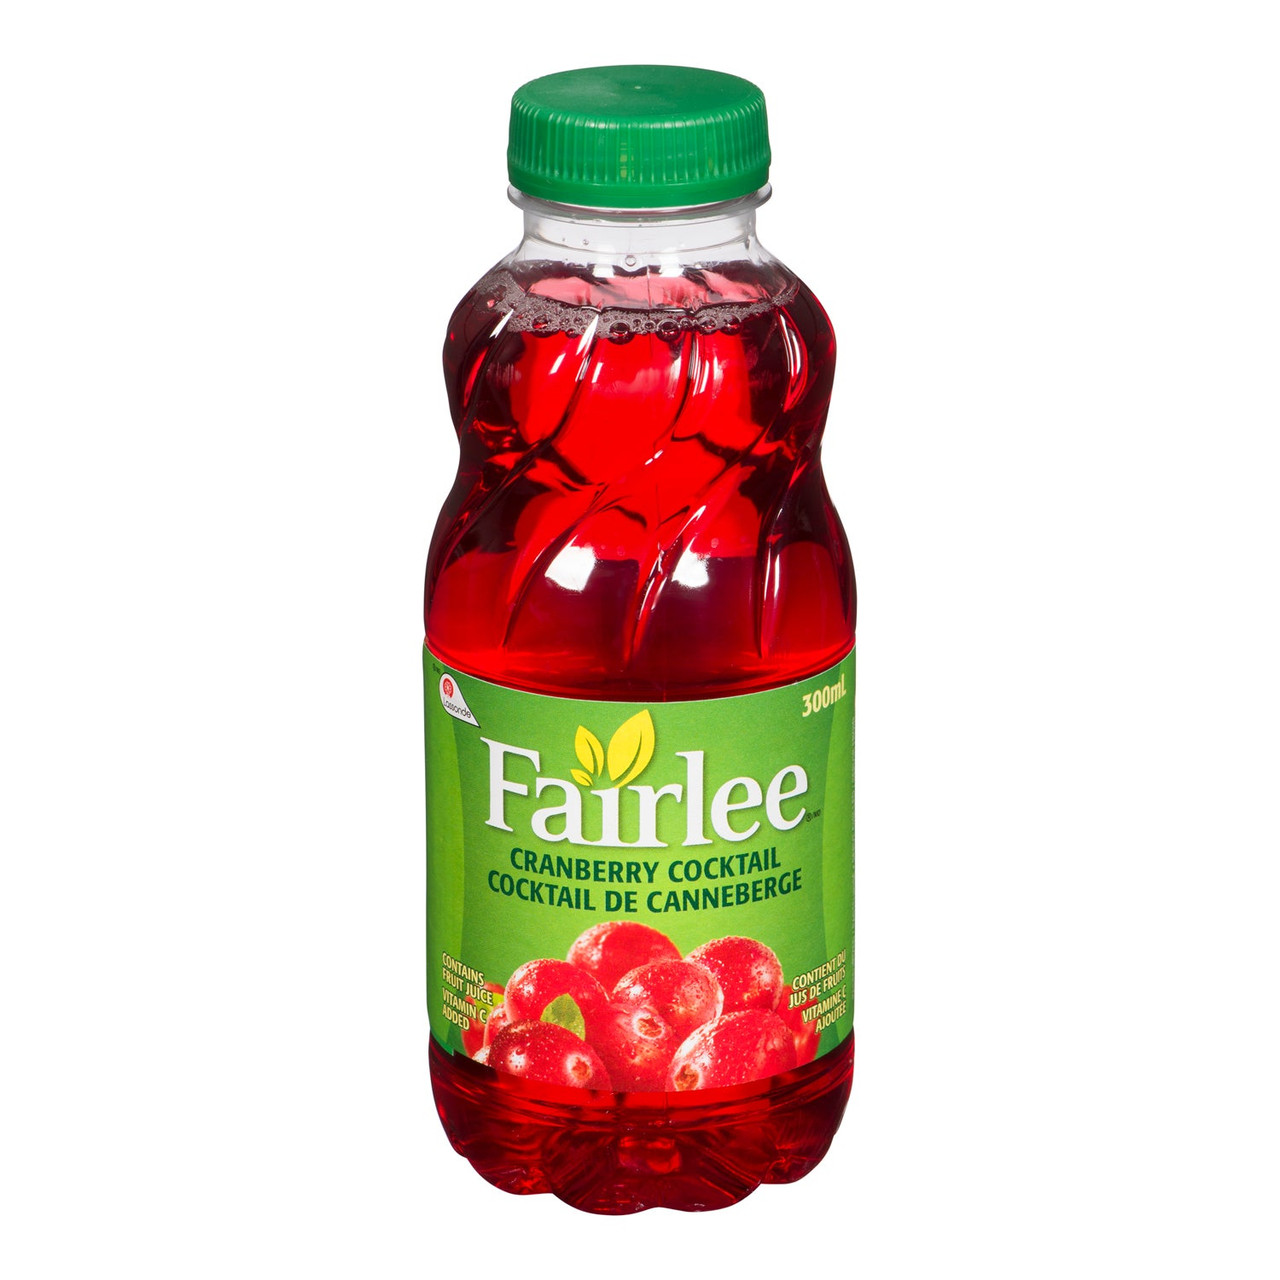 Fairlee Cranberry Cocktail Drink, Polyethylene | 300ML/Unit, 24 Units/Case